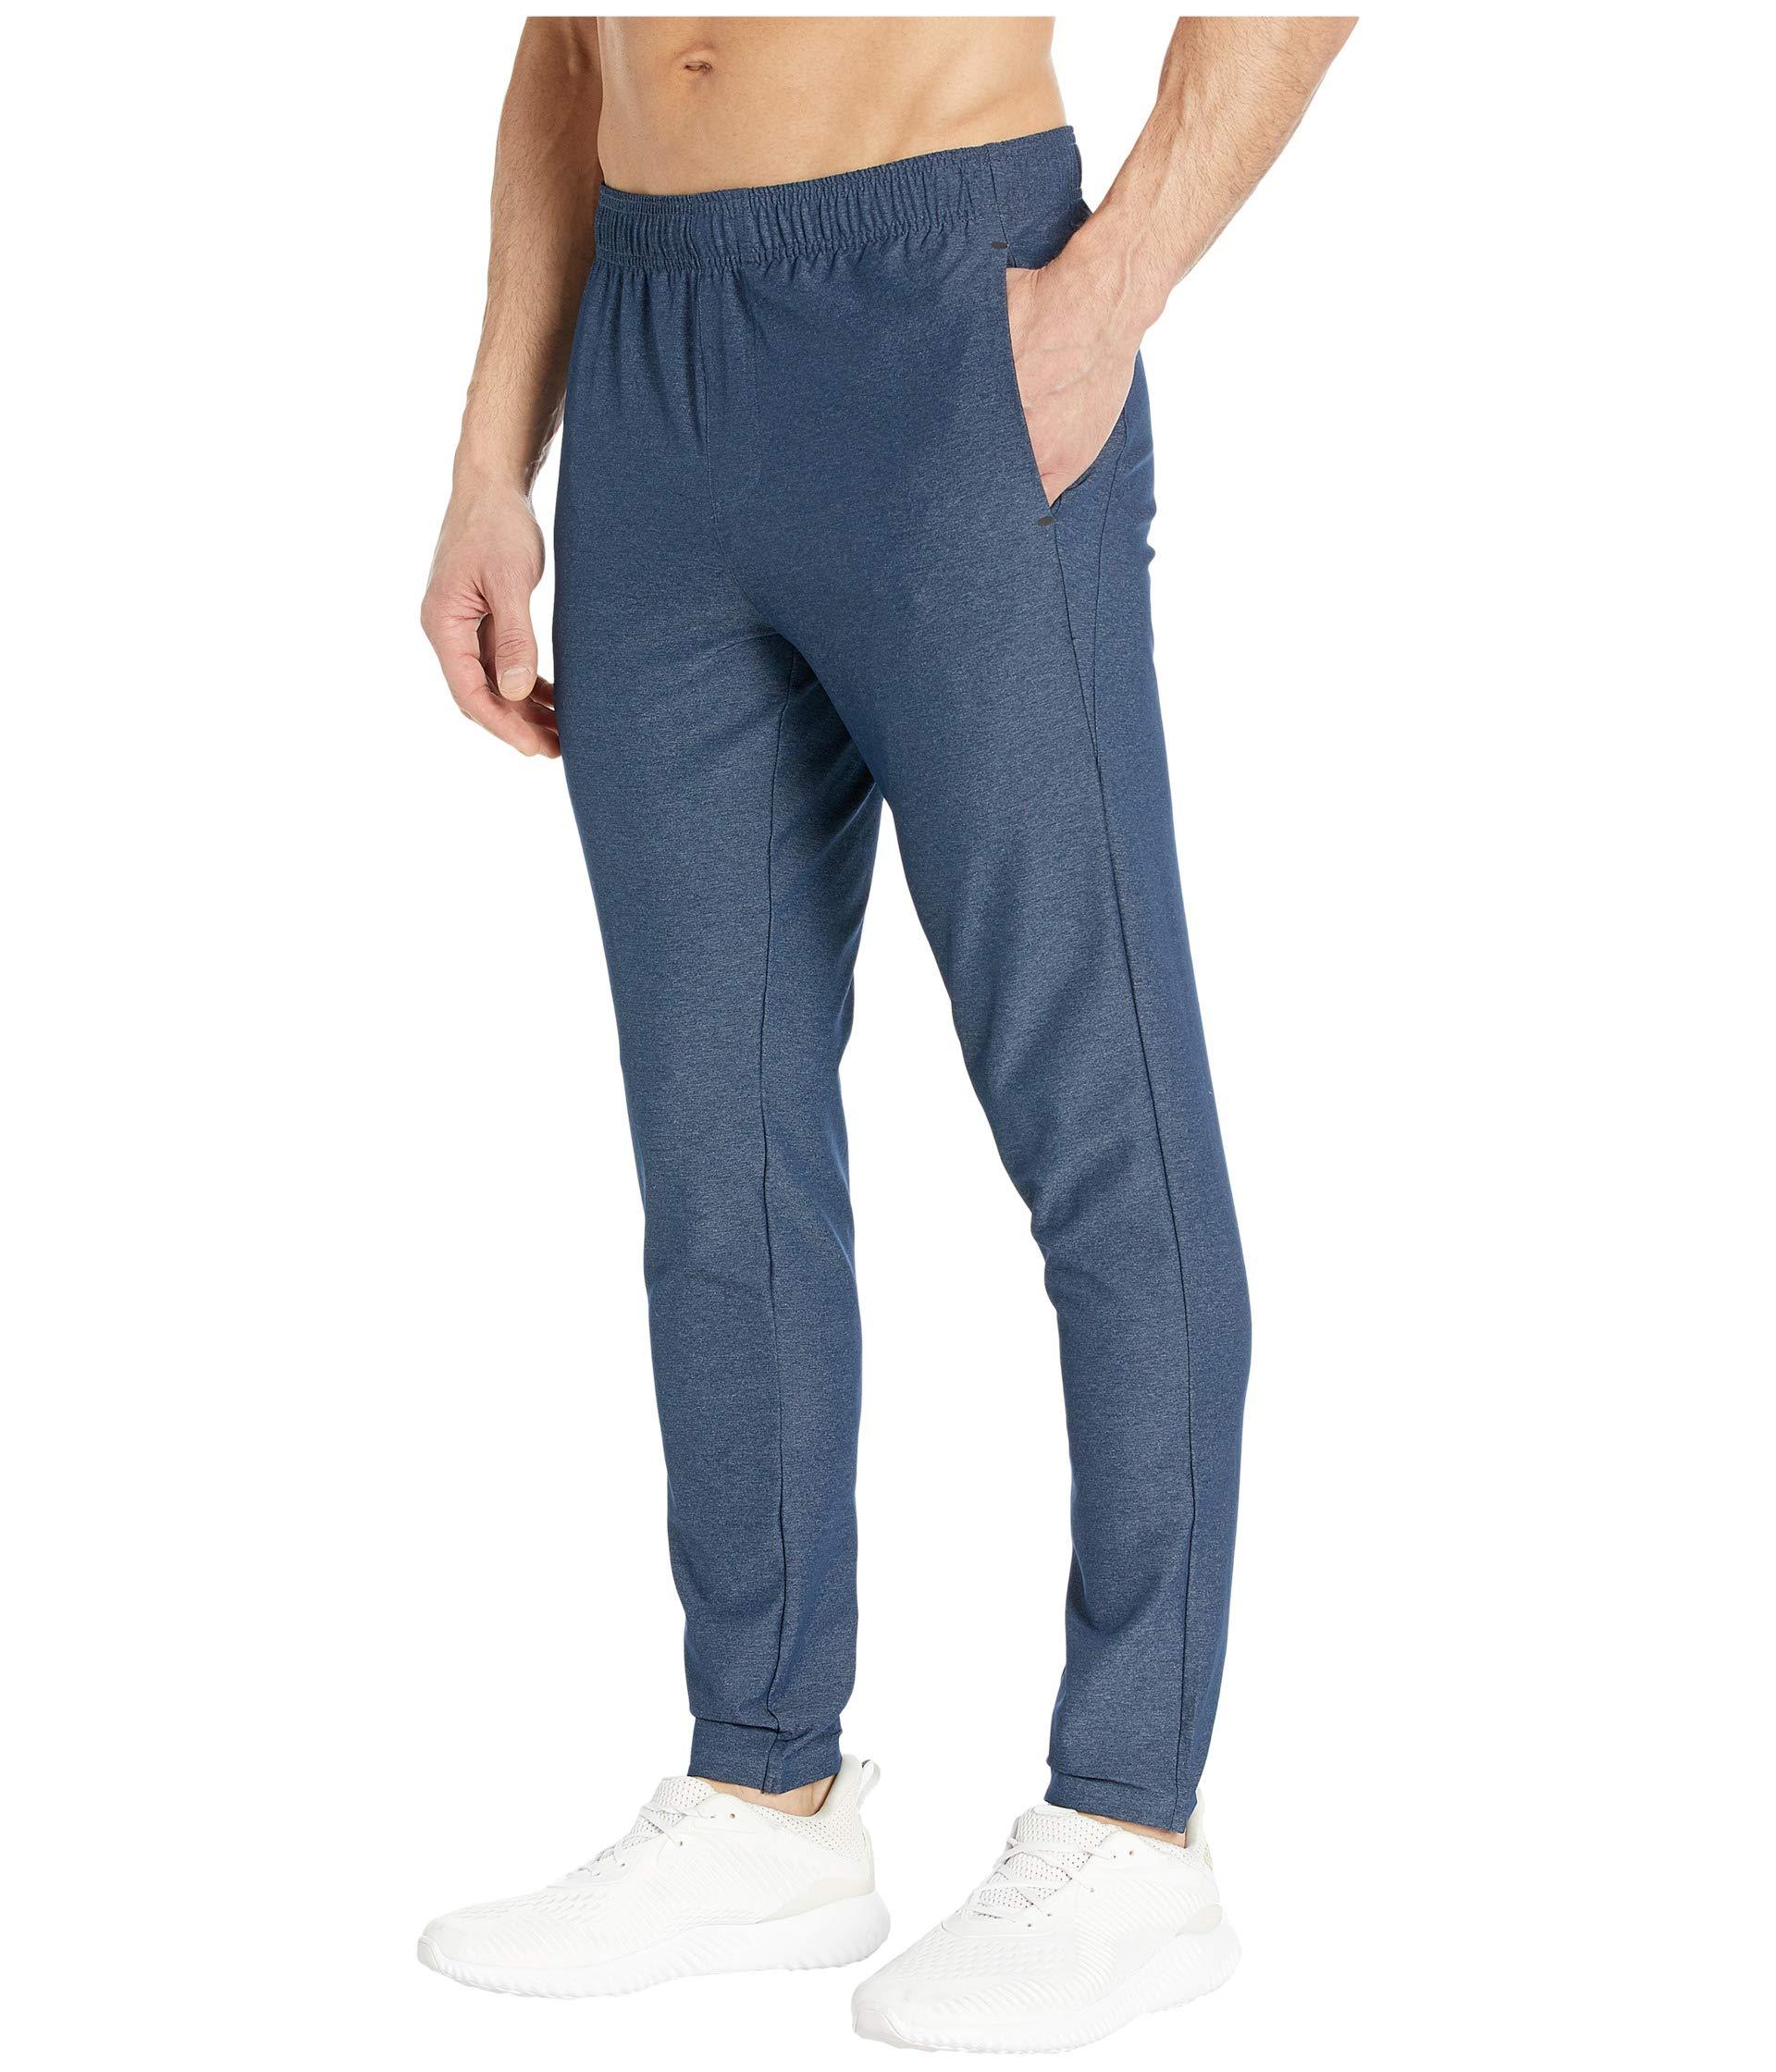 Rhone Synthetic Guru Pants in Navy (Blue) for Men - Lyst